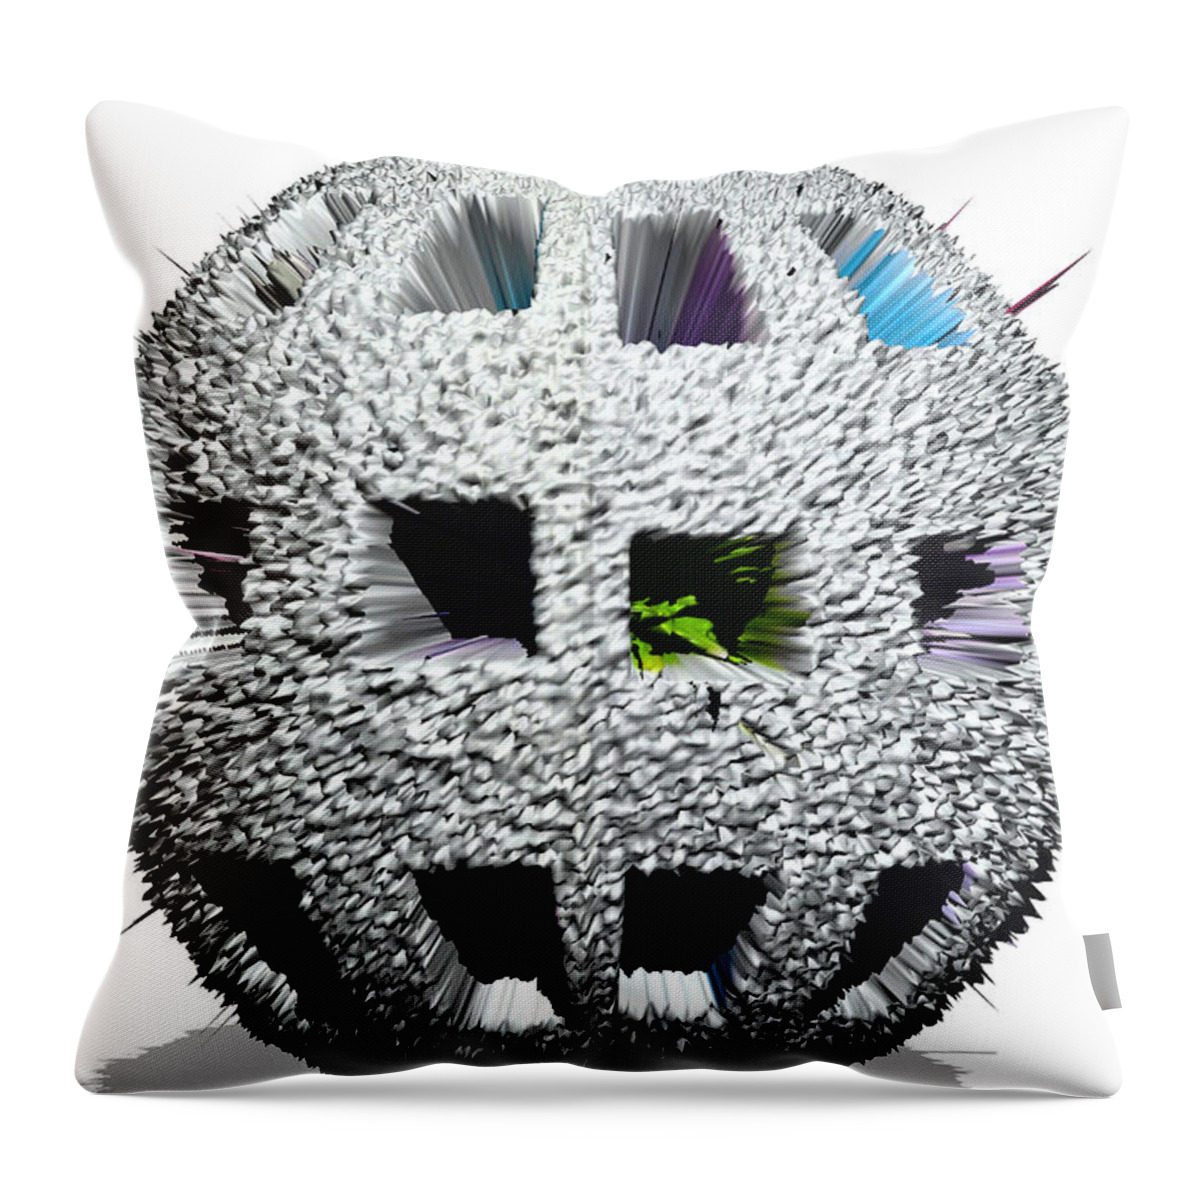 Abstract Art Throw Pillow featuring the digital art 3d Rubix Cube by Robert Margetts